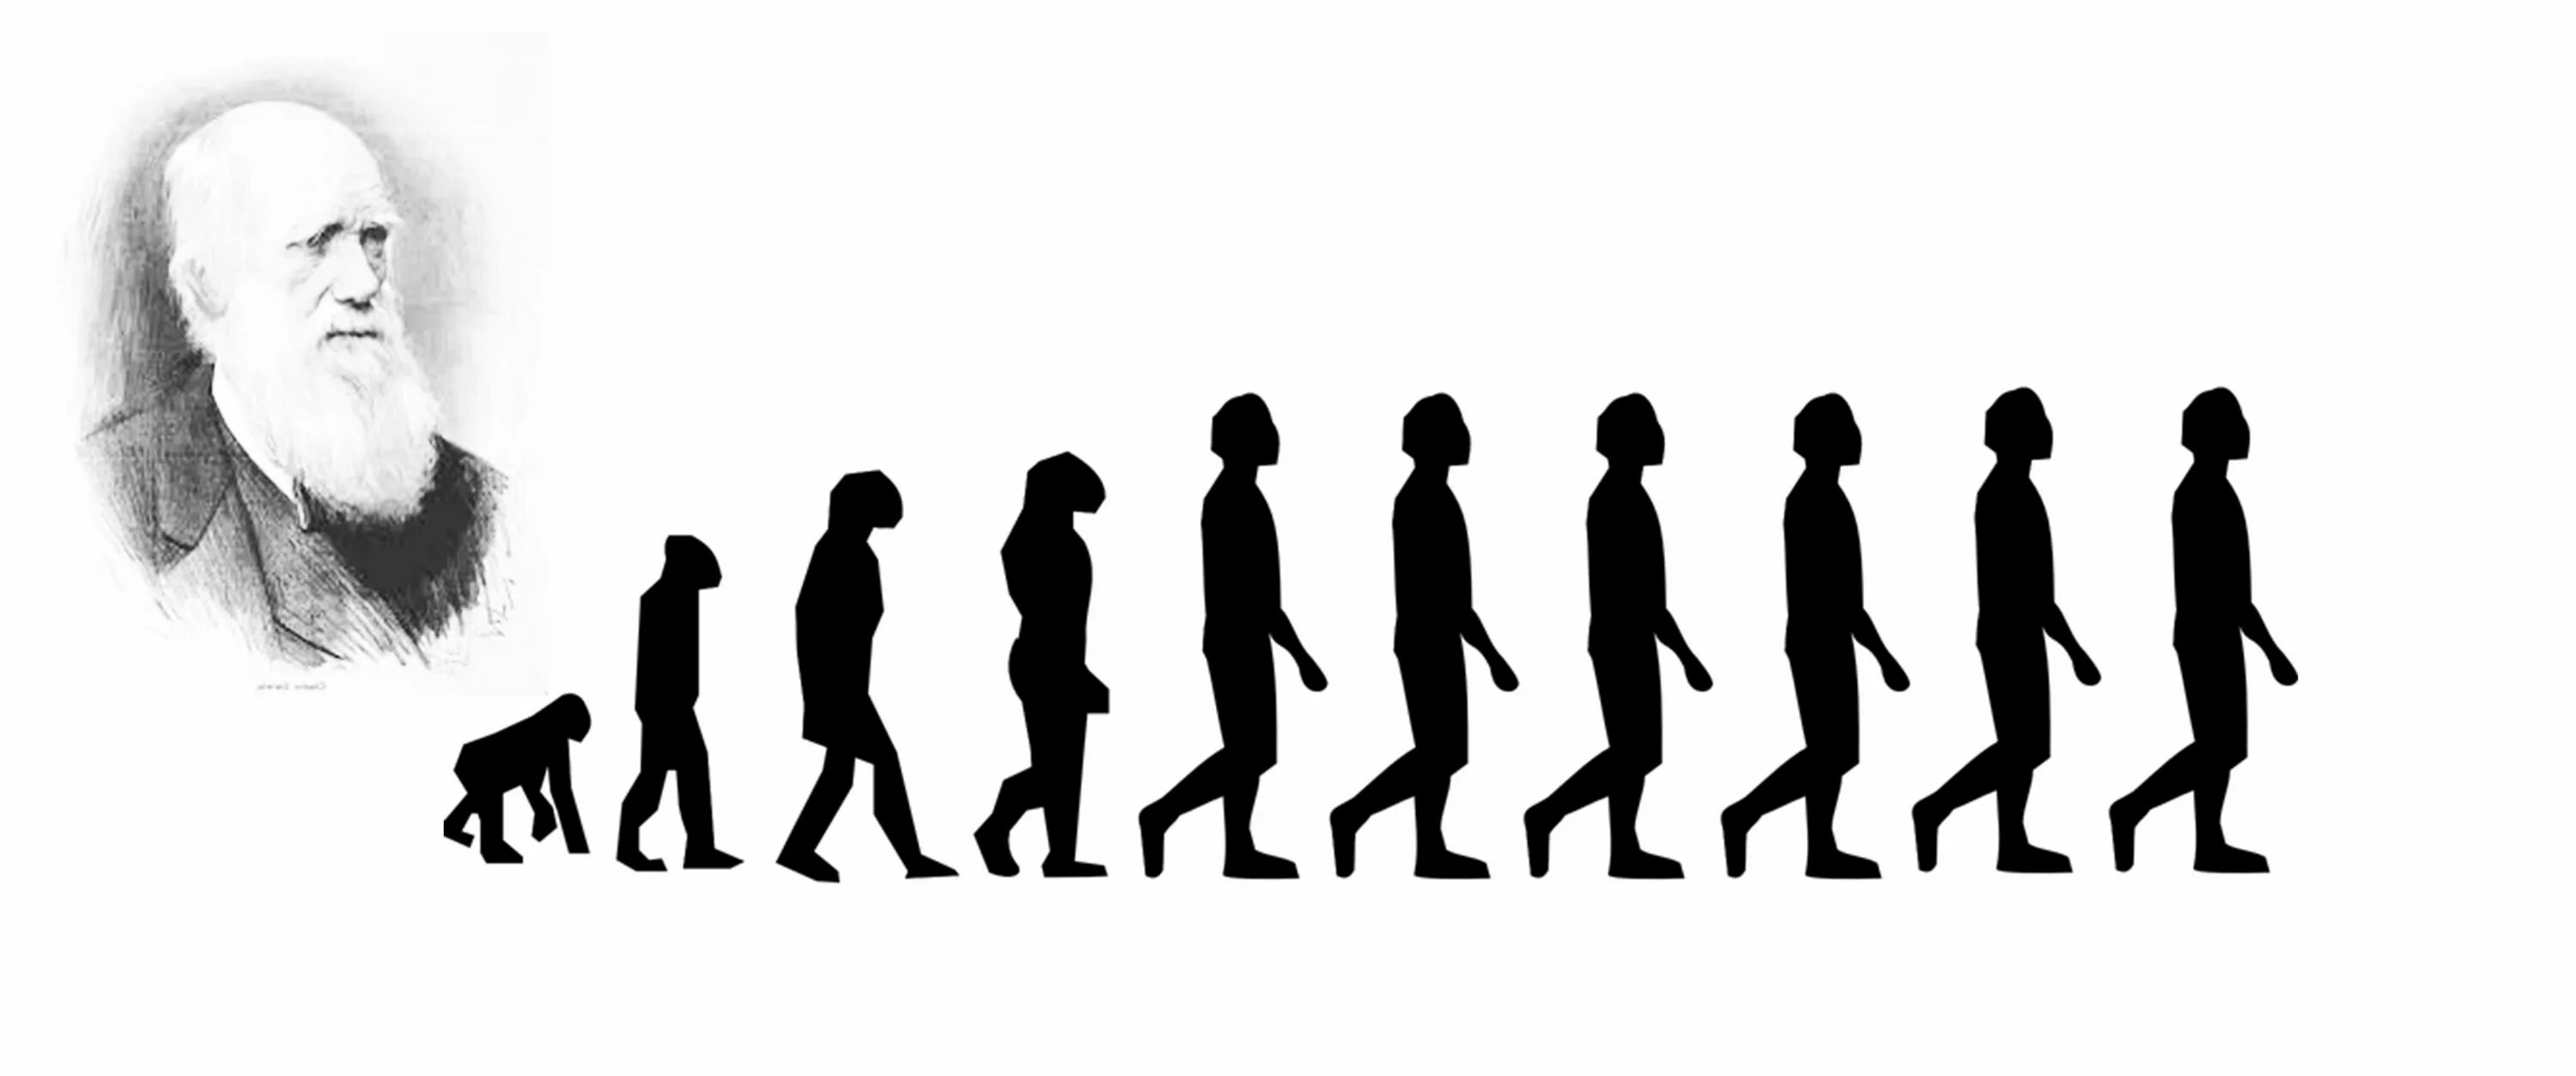 Учение Чарльза Дарвина. Эволюционная теория Чарльза Дарвина. Теория эволюции Дарвина.